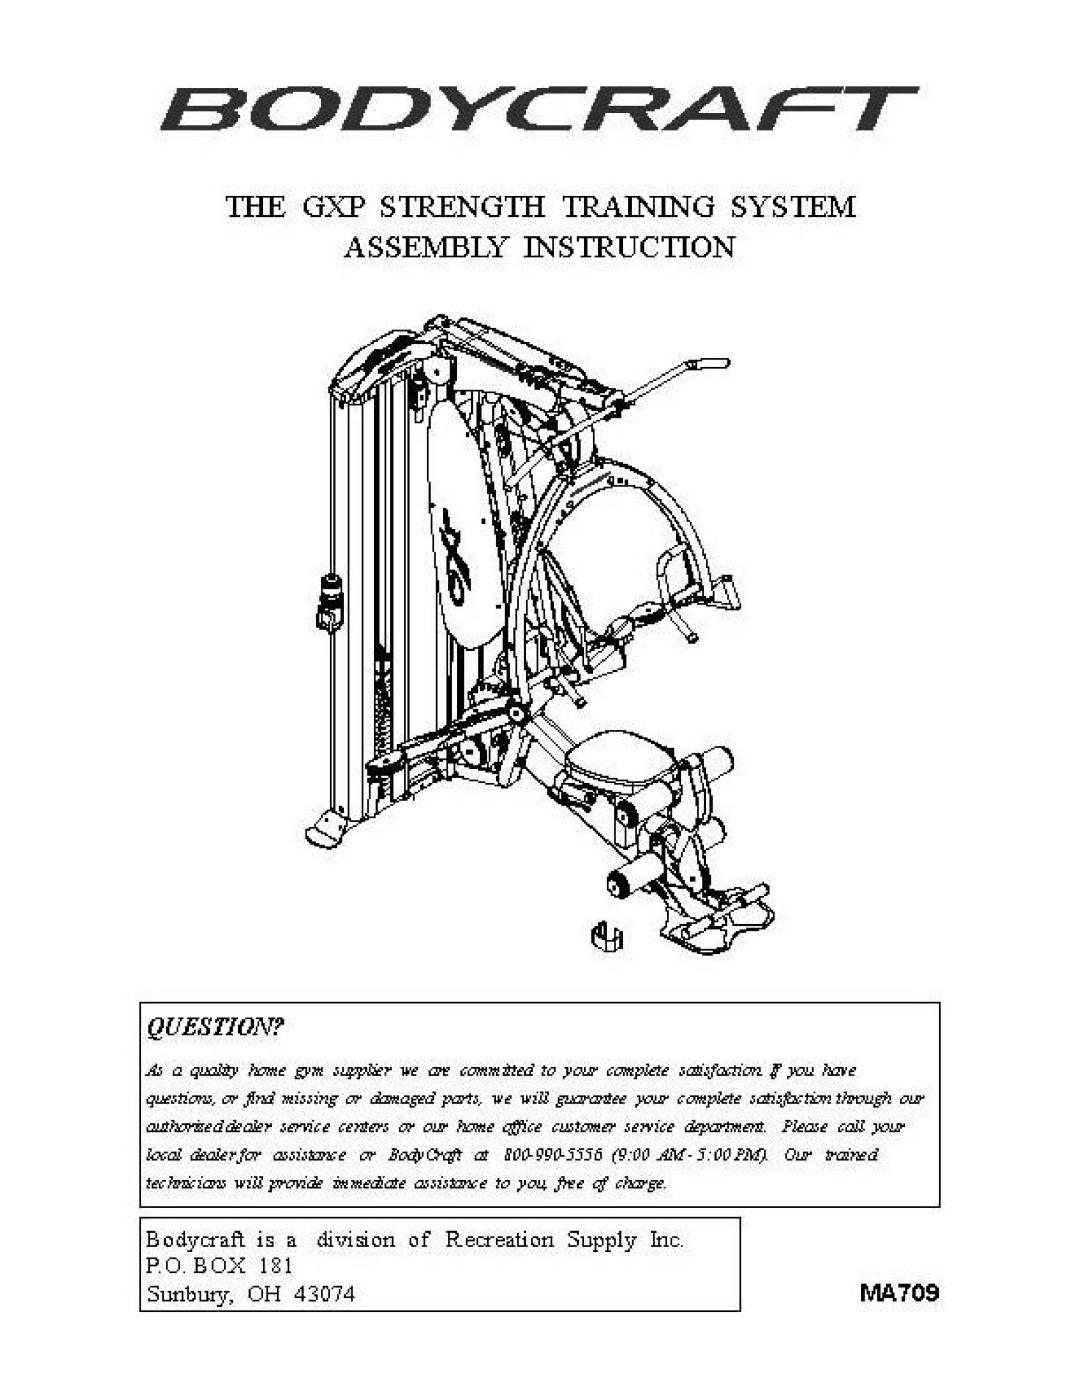 BodyCraft GXP manual Tiie Gxp Strengtii Training System Assembly Instruction, Bodycraft, Question?, MA709 